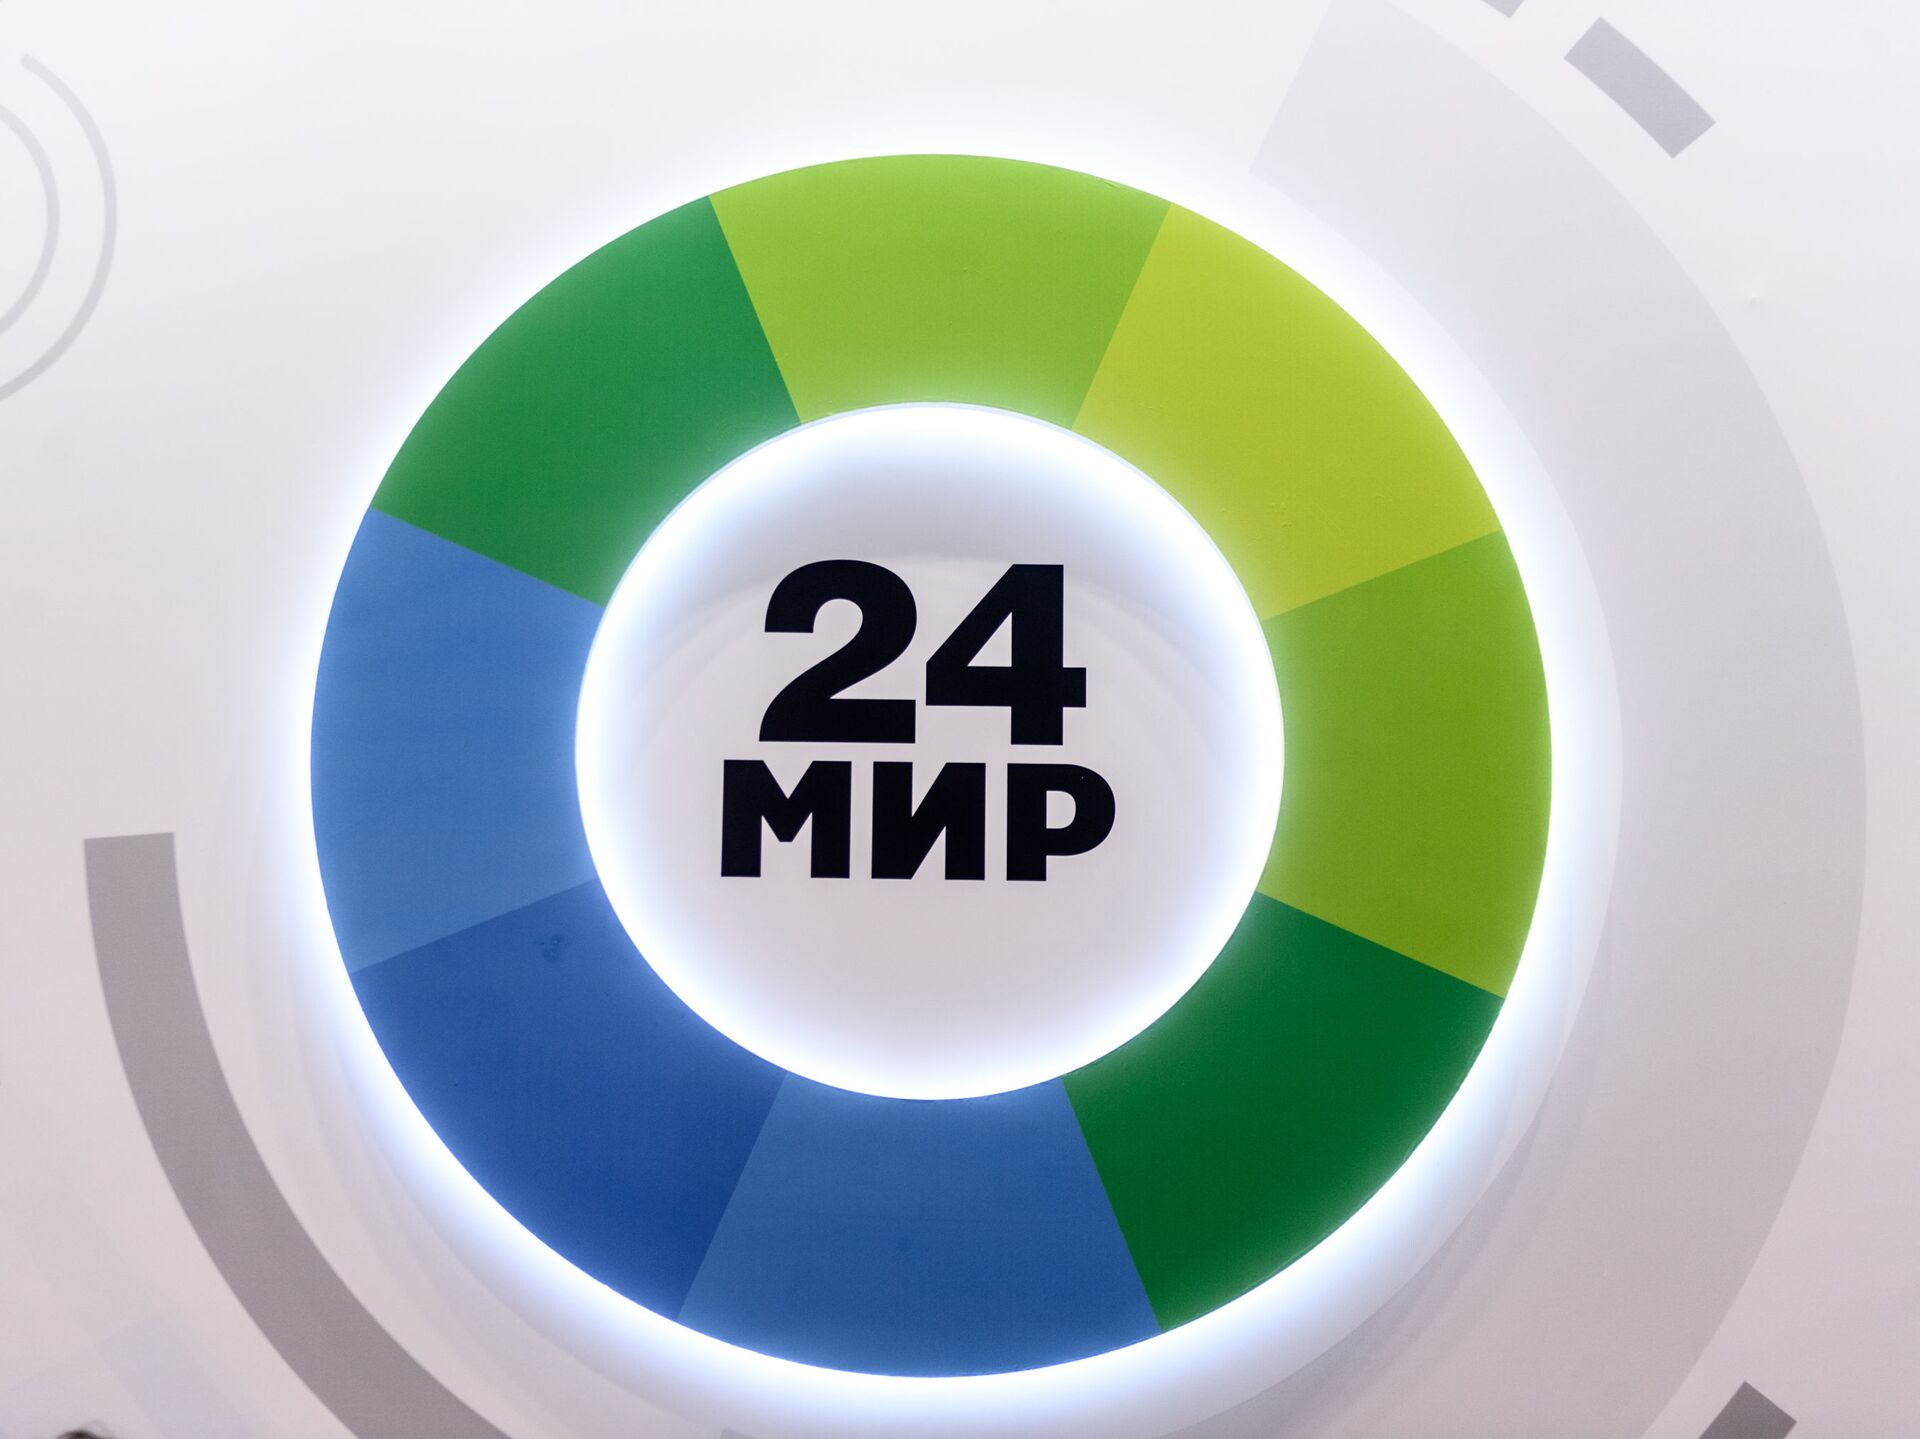 Миру 24 сайт. Логотип телеканала мик24. Мир 24. Телеканал мир 24. Эмблема телеканала мир.